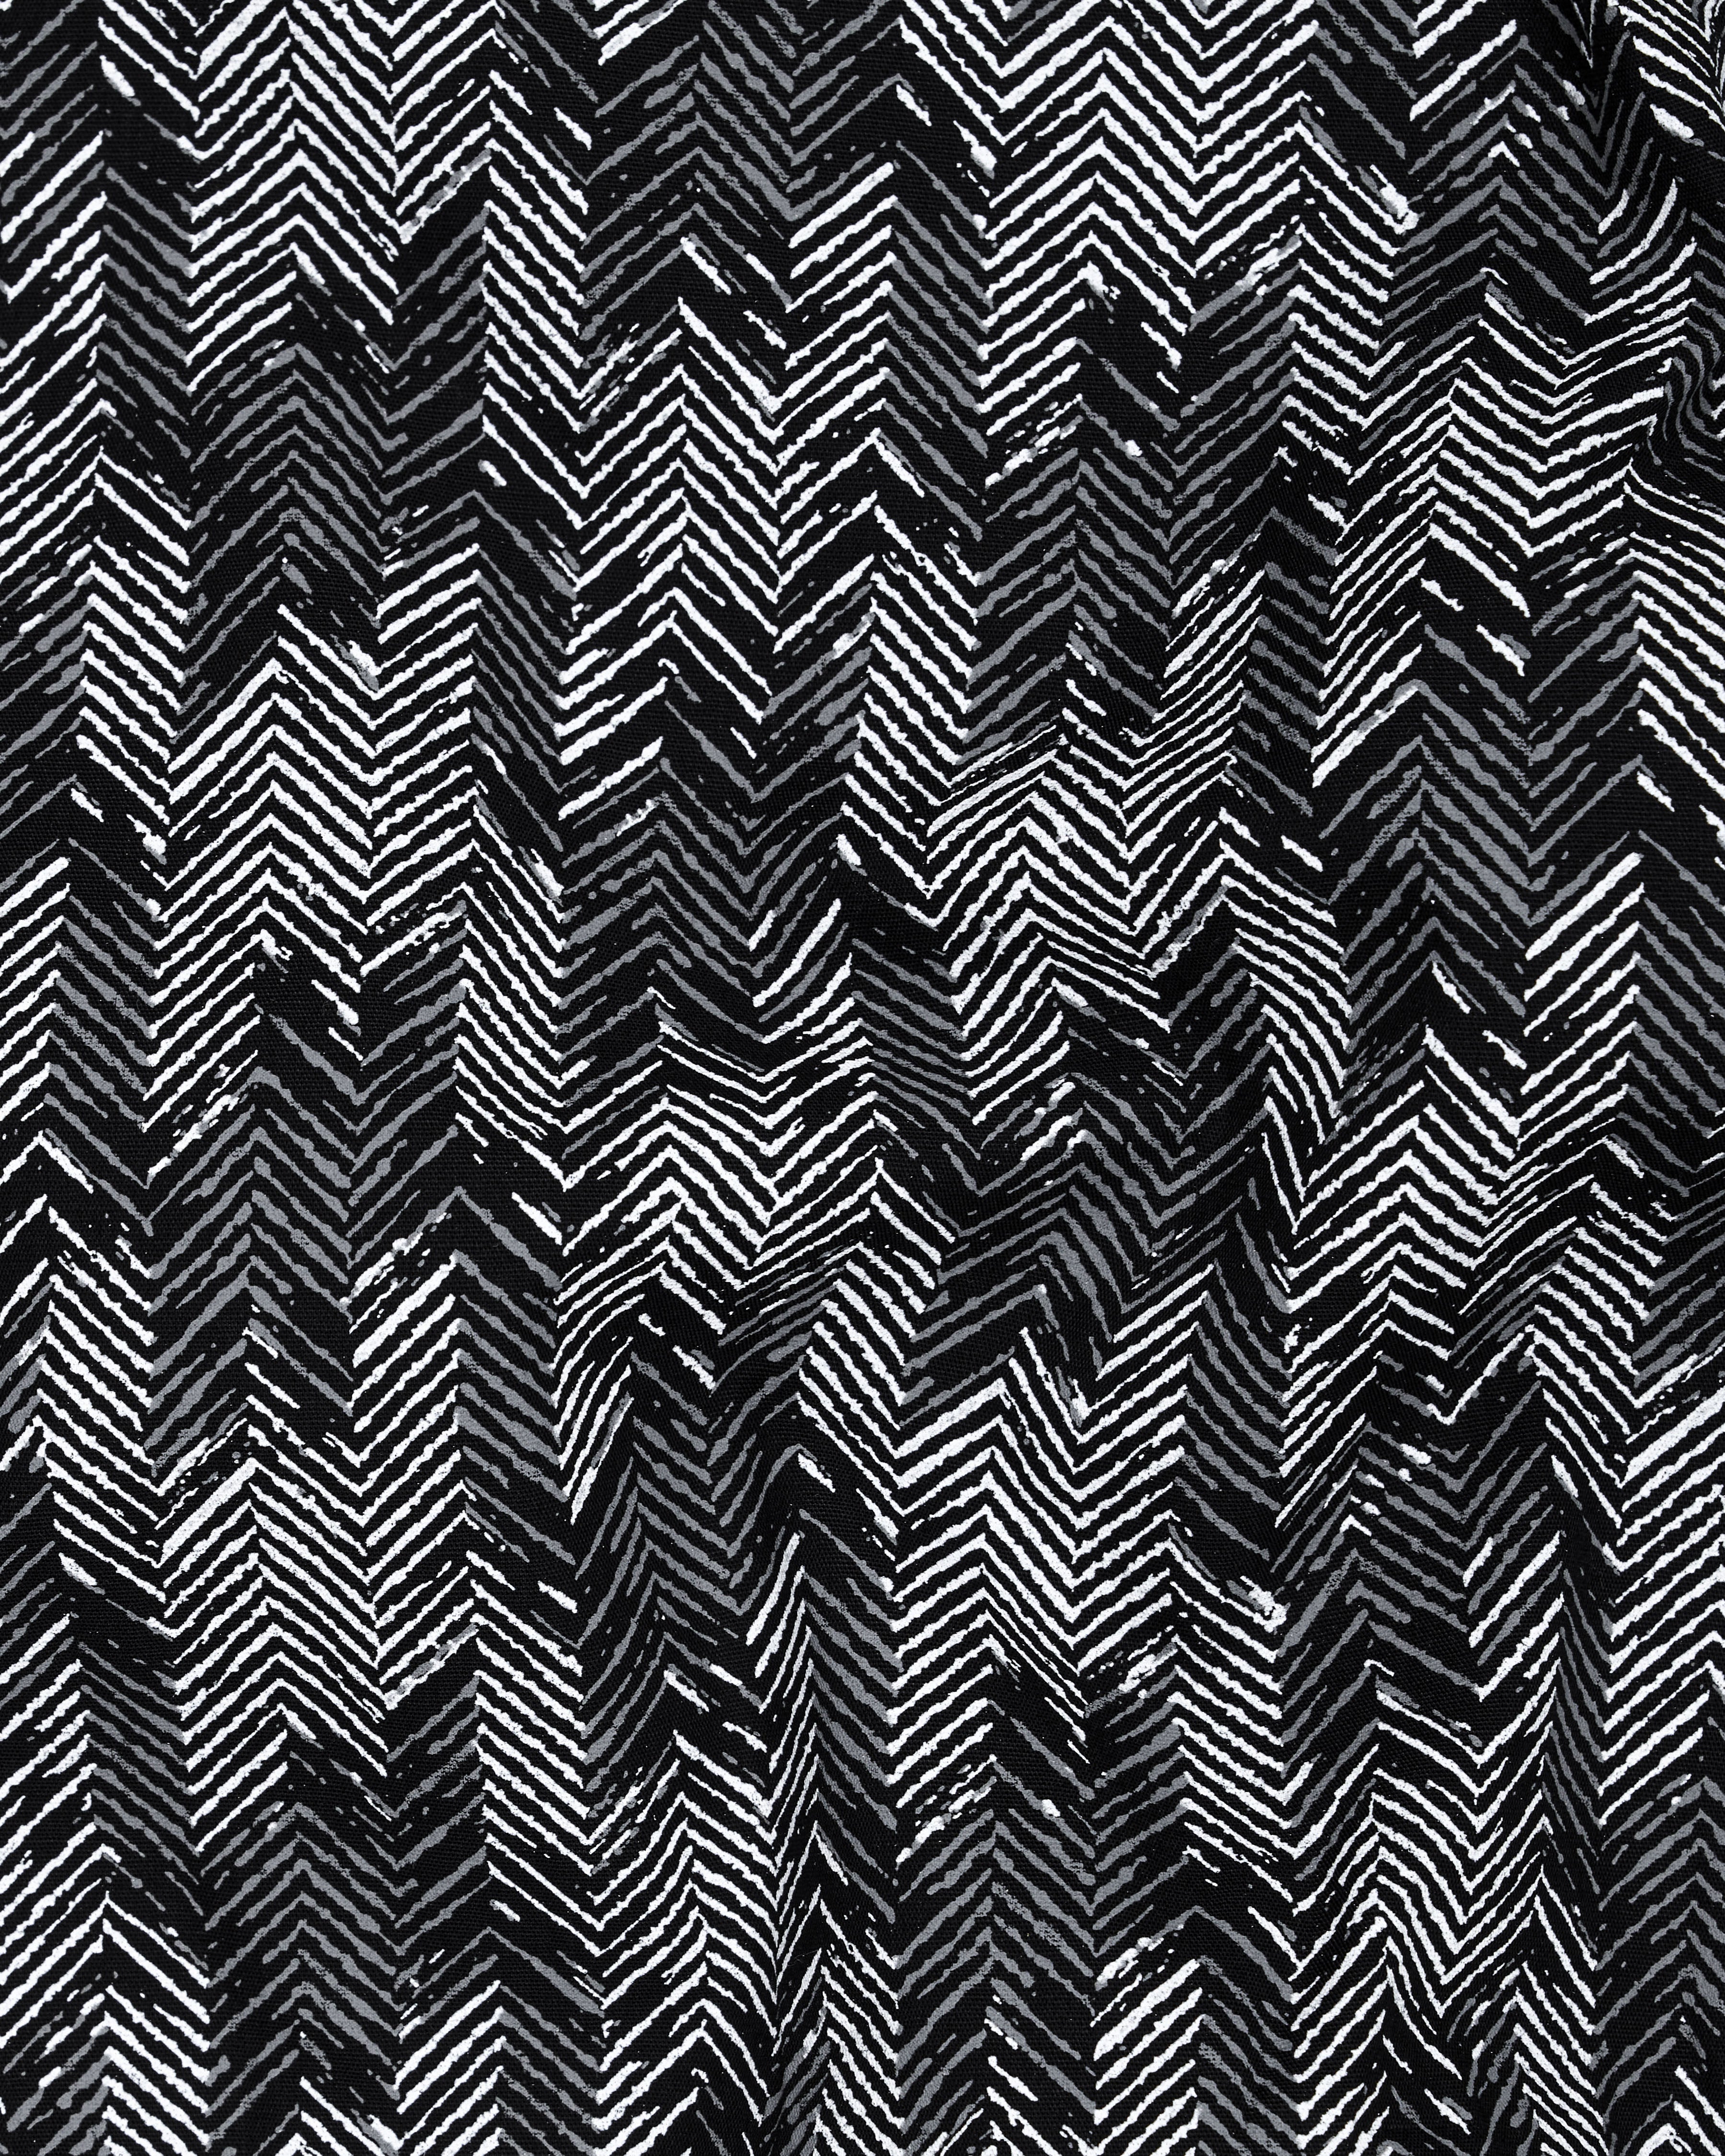 Jade Black with Gravel Gray Sanganeri Block Printed Royal Oxford Shirt  8743-BLK-38,8743-BLK-H-38,8743-BLK-39,8743-BLK-H-39,8743-BLK-40,8743-BLK-H-40,8743-BLK-42,8743-BLK-H-42,8743-BLK-44,8743-BLK-H-44,8743-BLK-46,8743-BLK-H-46,8743-BLK-48,8743-BLK-H-48,8743-BLK-50,8743-BLK-H-50,8743-BLK-52,8743-BLK-H-52